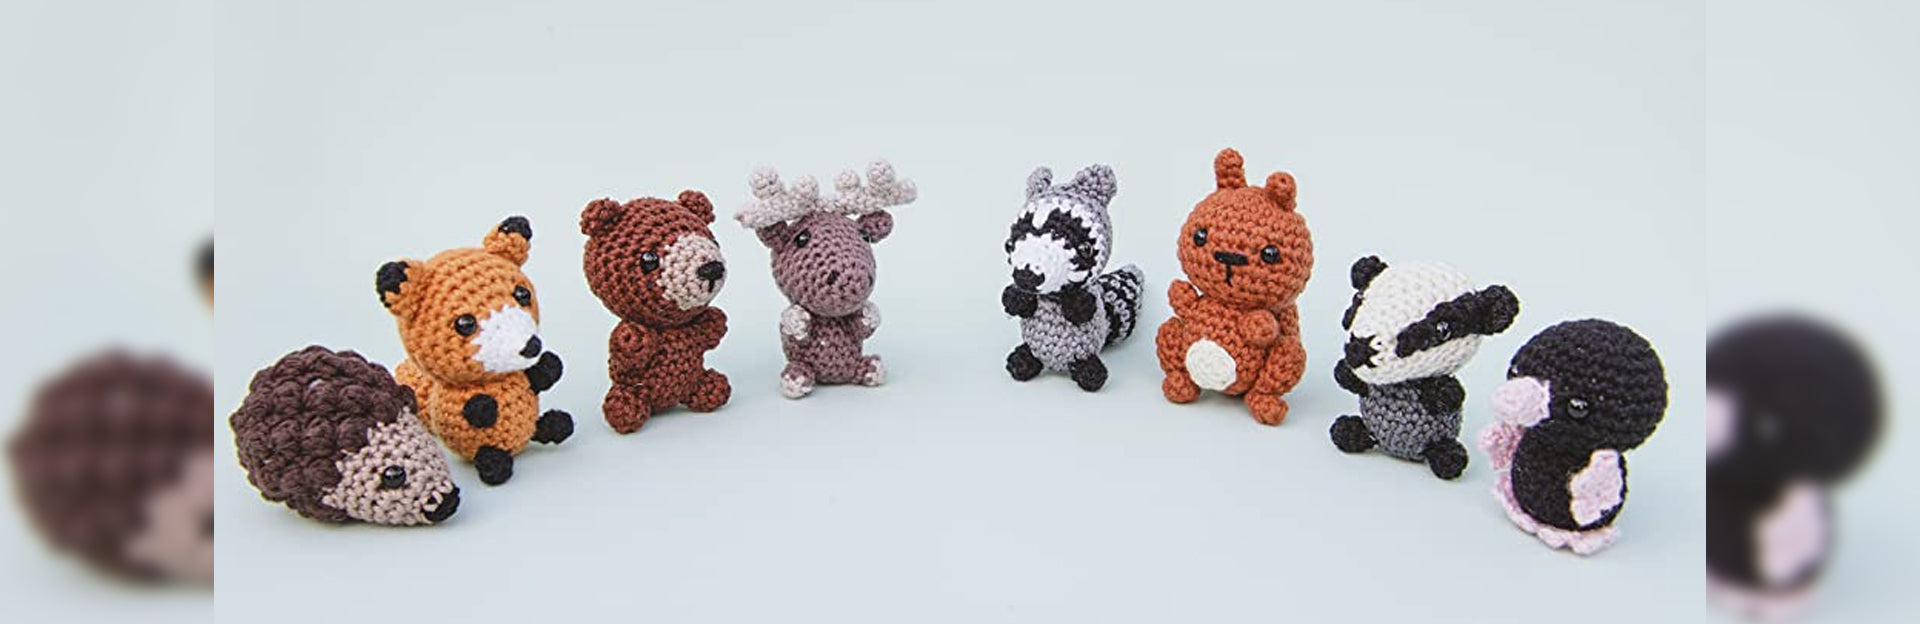 Crochet Cute Amigurumi Animal Patterns: Adorable Animal Crochet